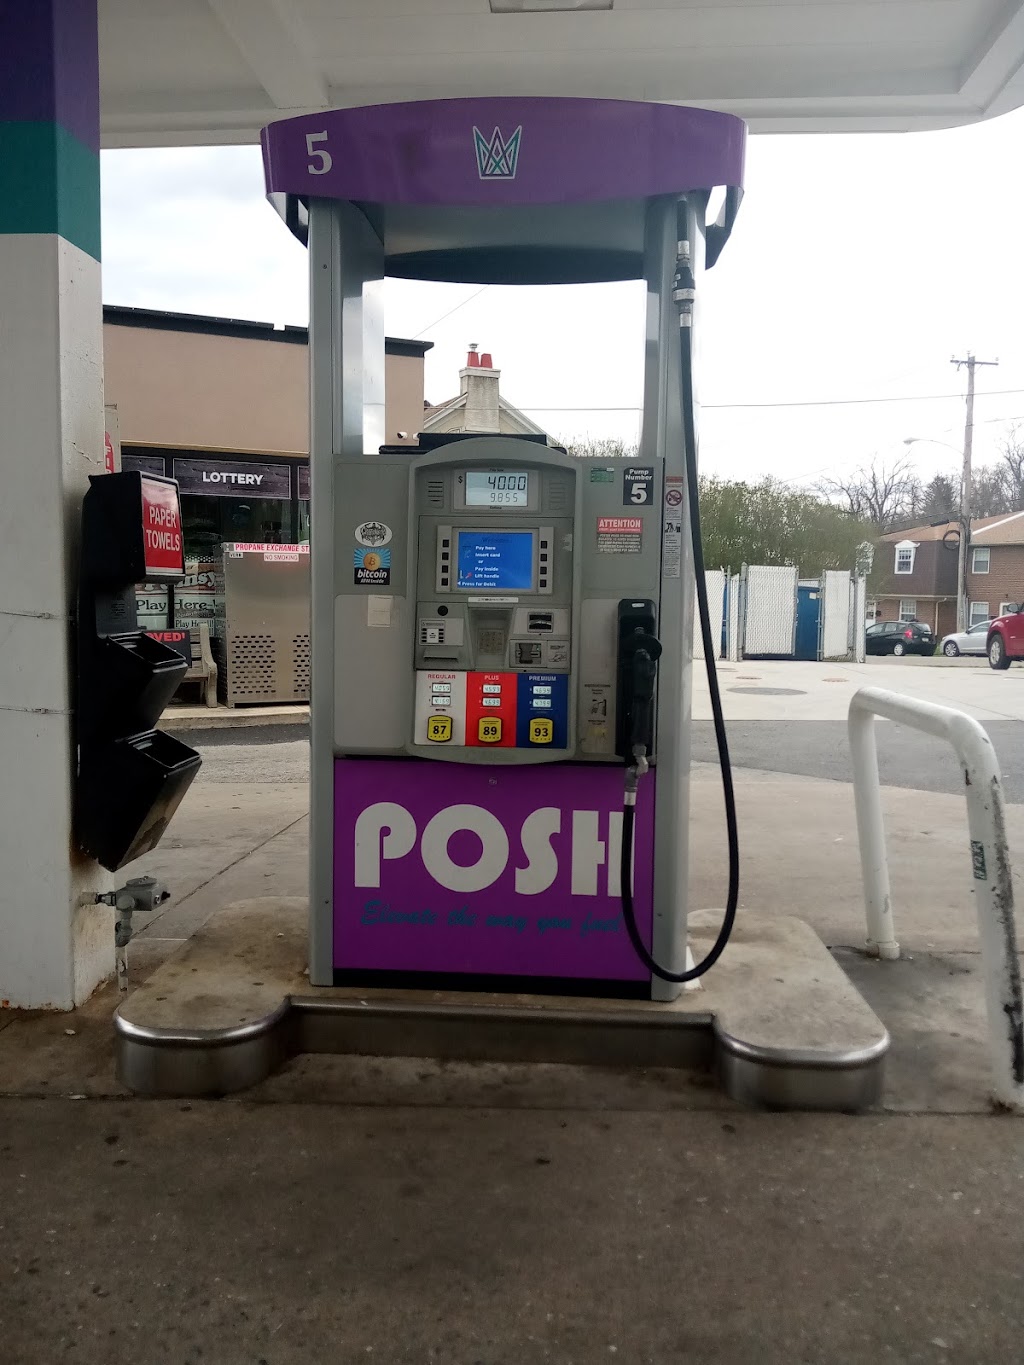 Posh Fuel and Food | 8901 Ridge Ave, Philadelphia, PA 19128 | Phone: (267) 748-2115